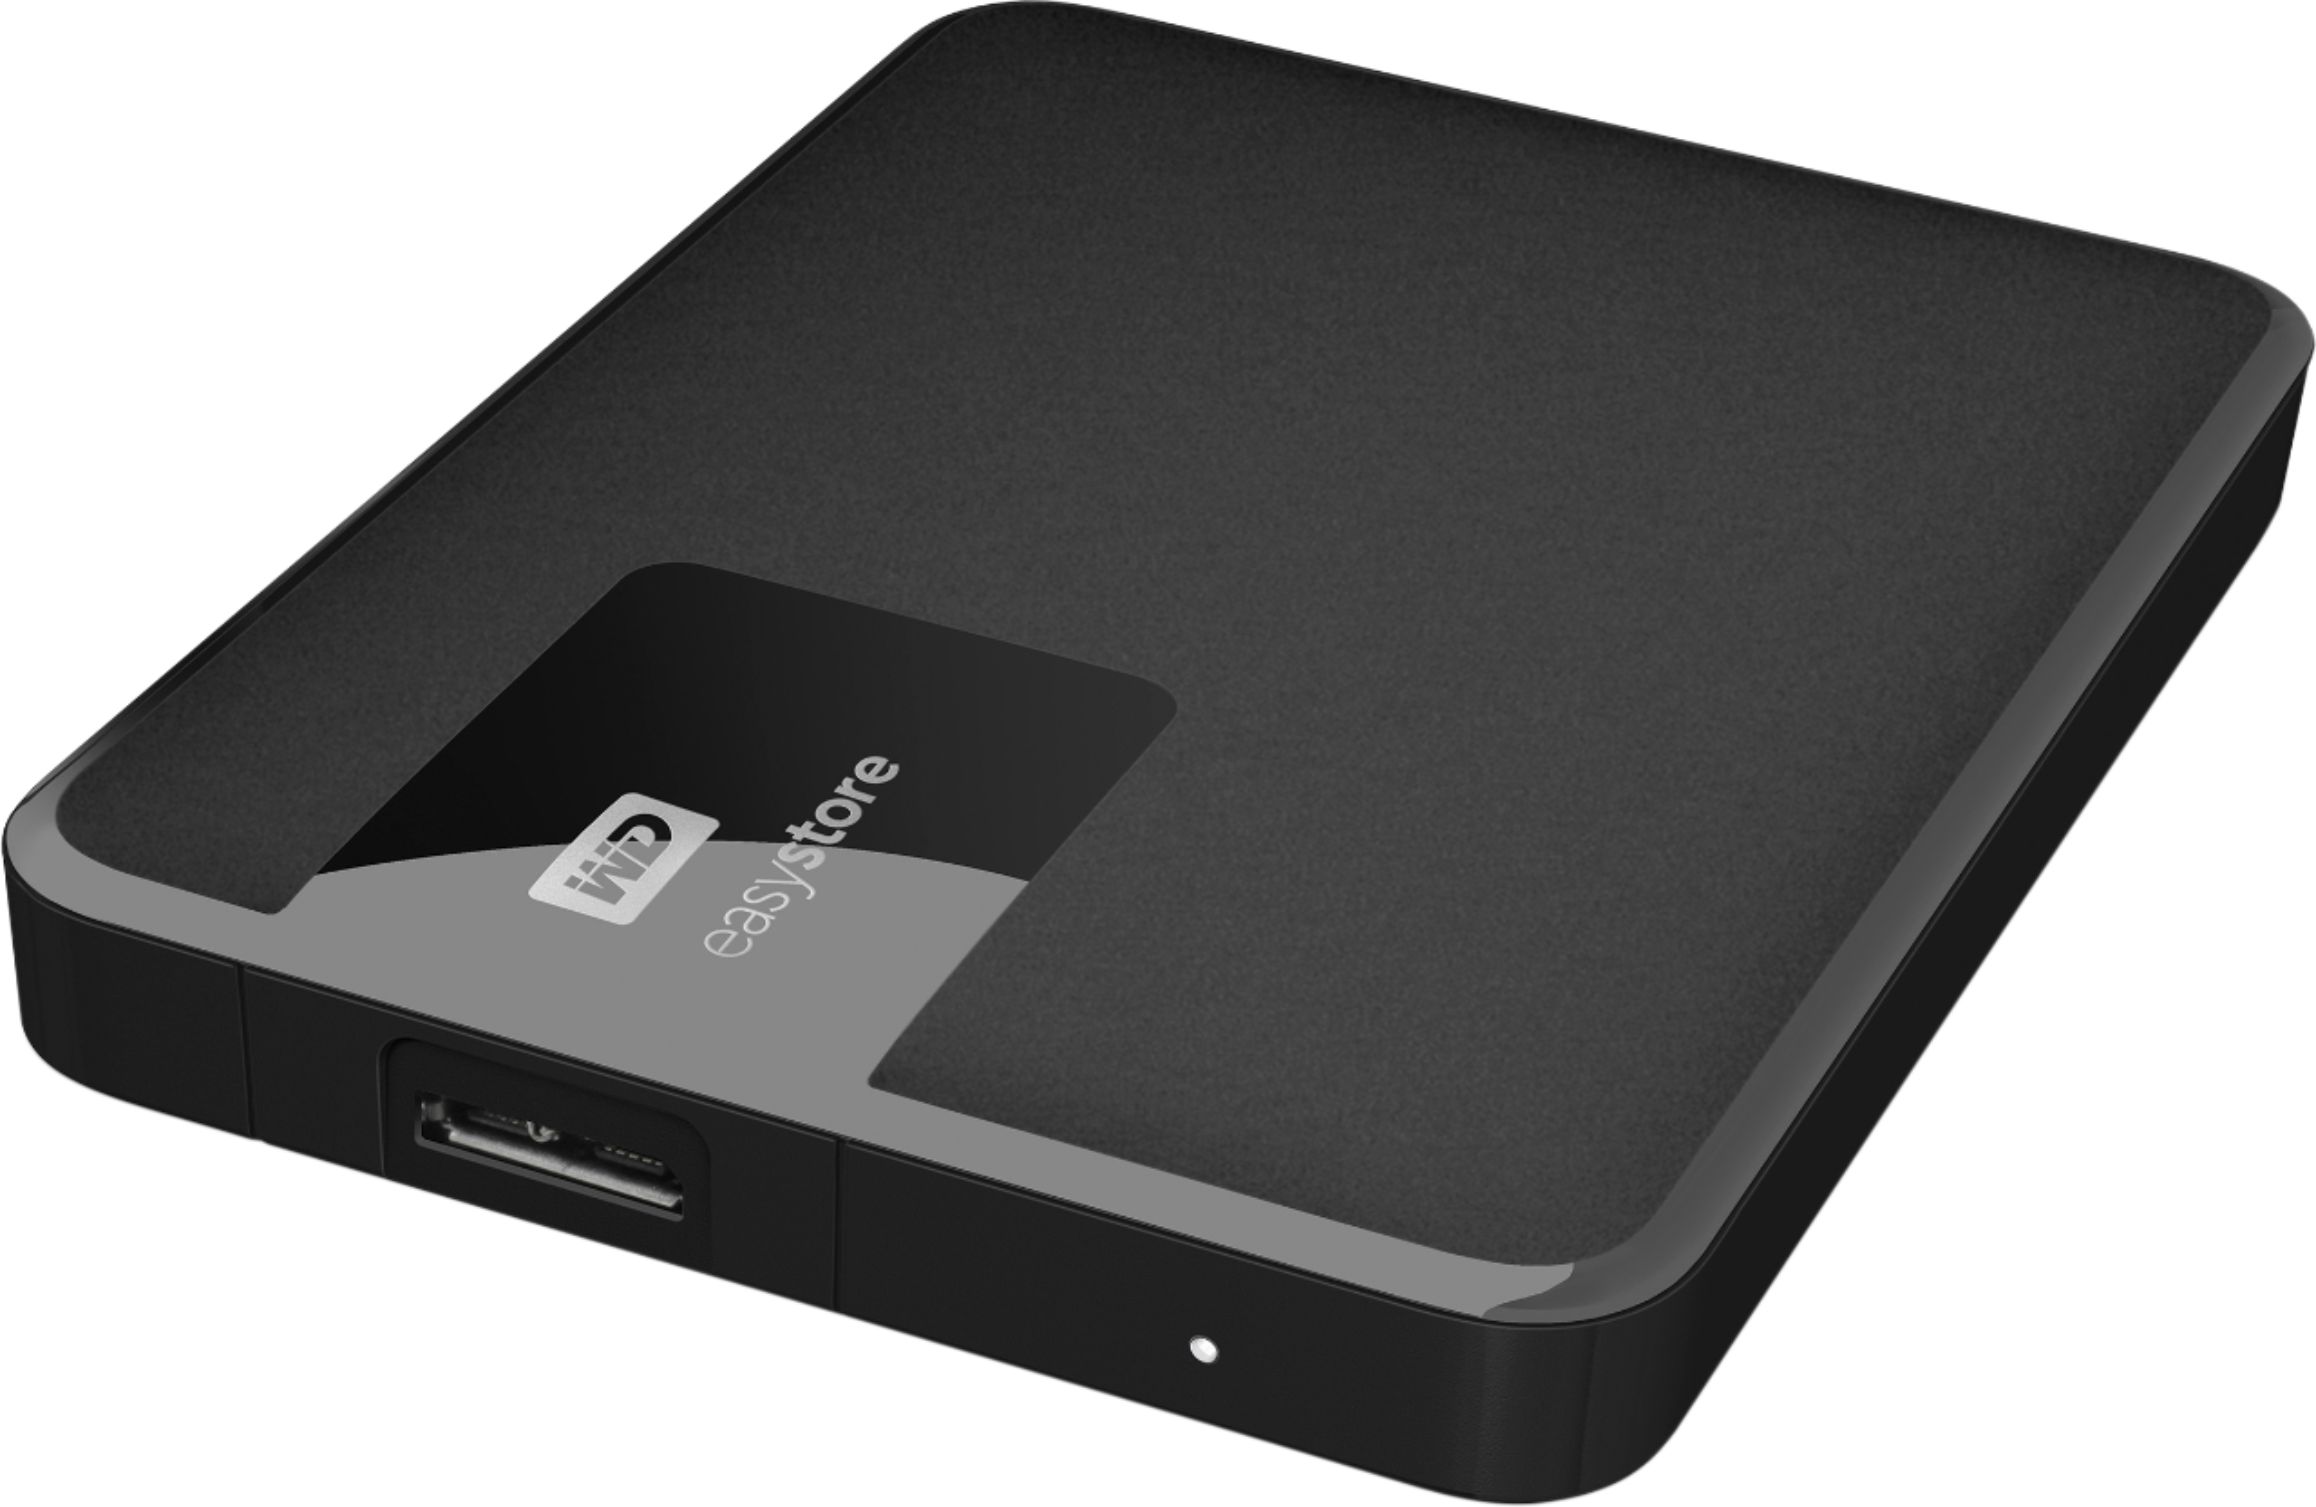 WD Black Easystore 4TB External USB 3.0 Portable Hard Drive 